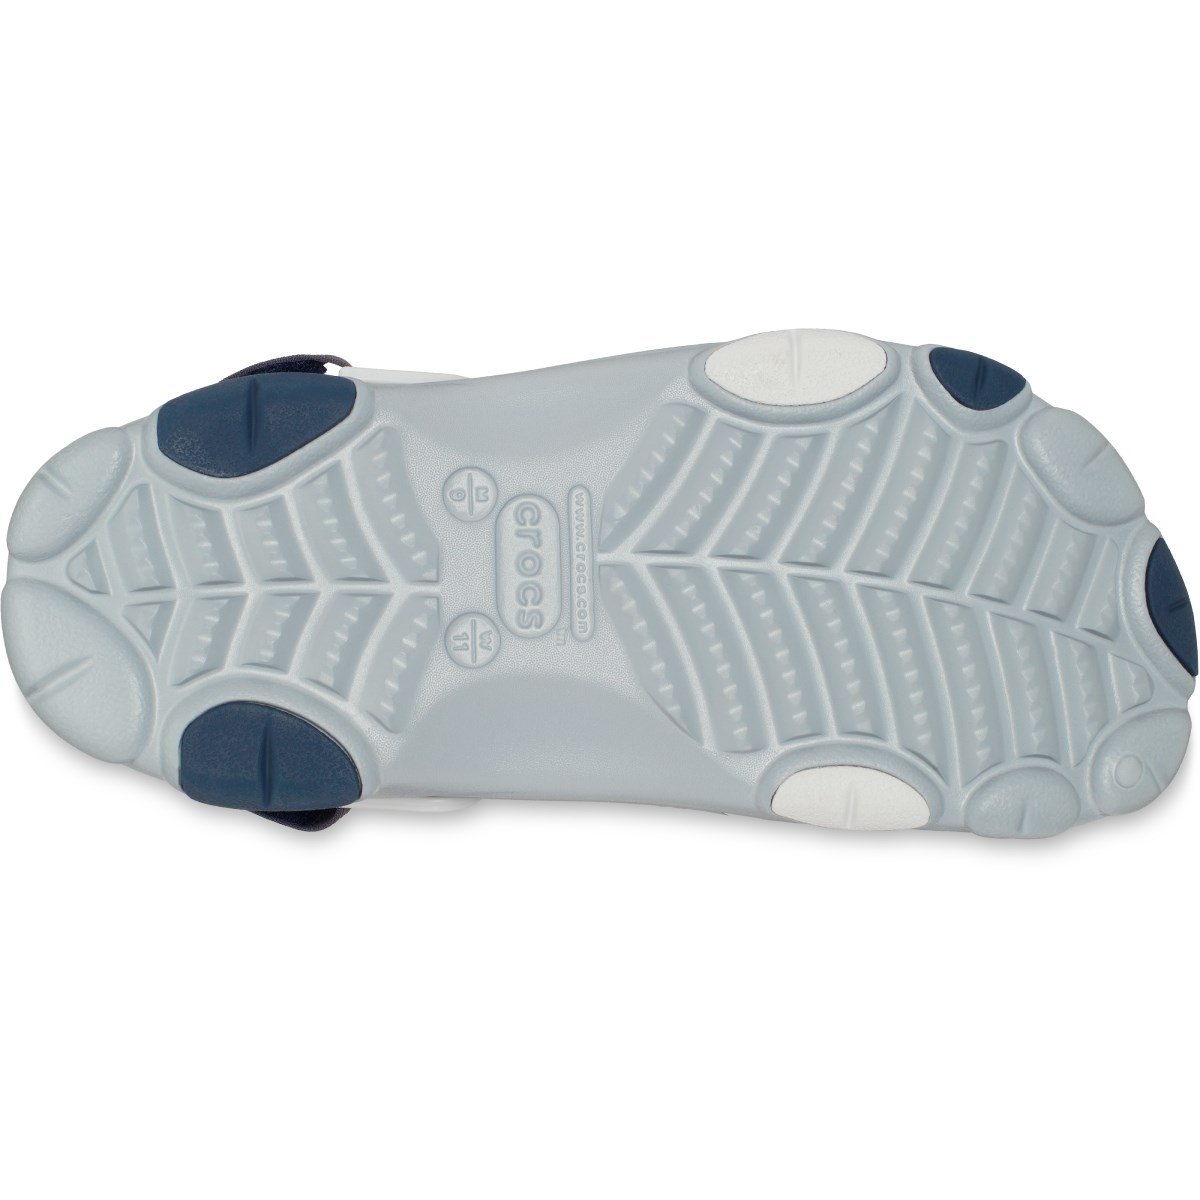 Crocs Unisex Sandalet 206340 Light Grey